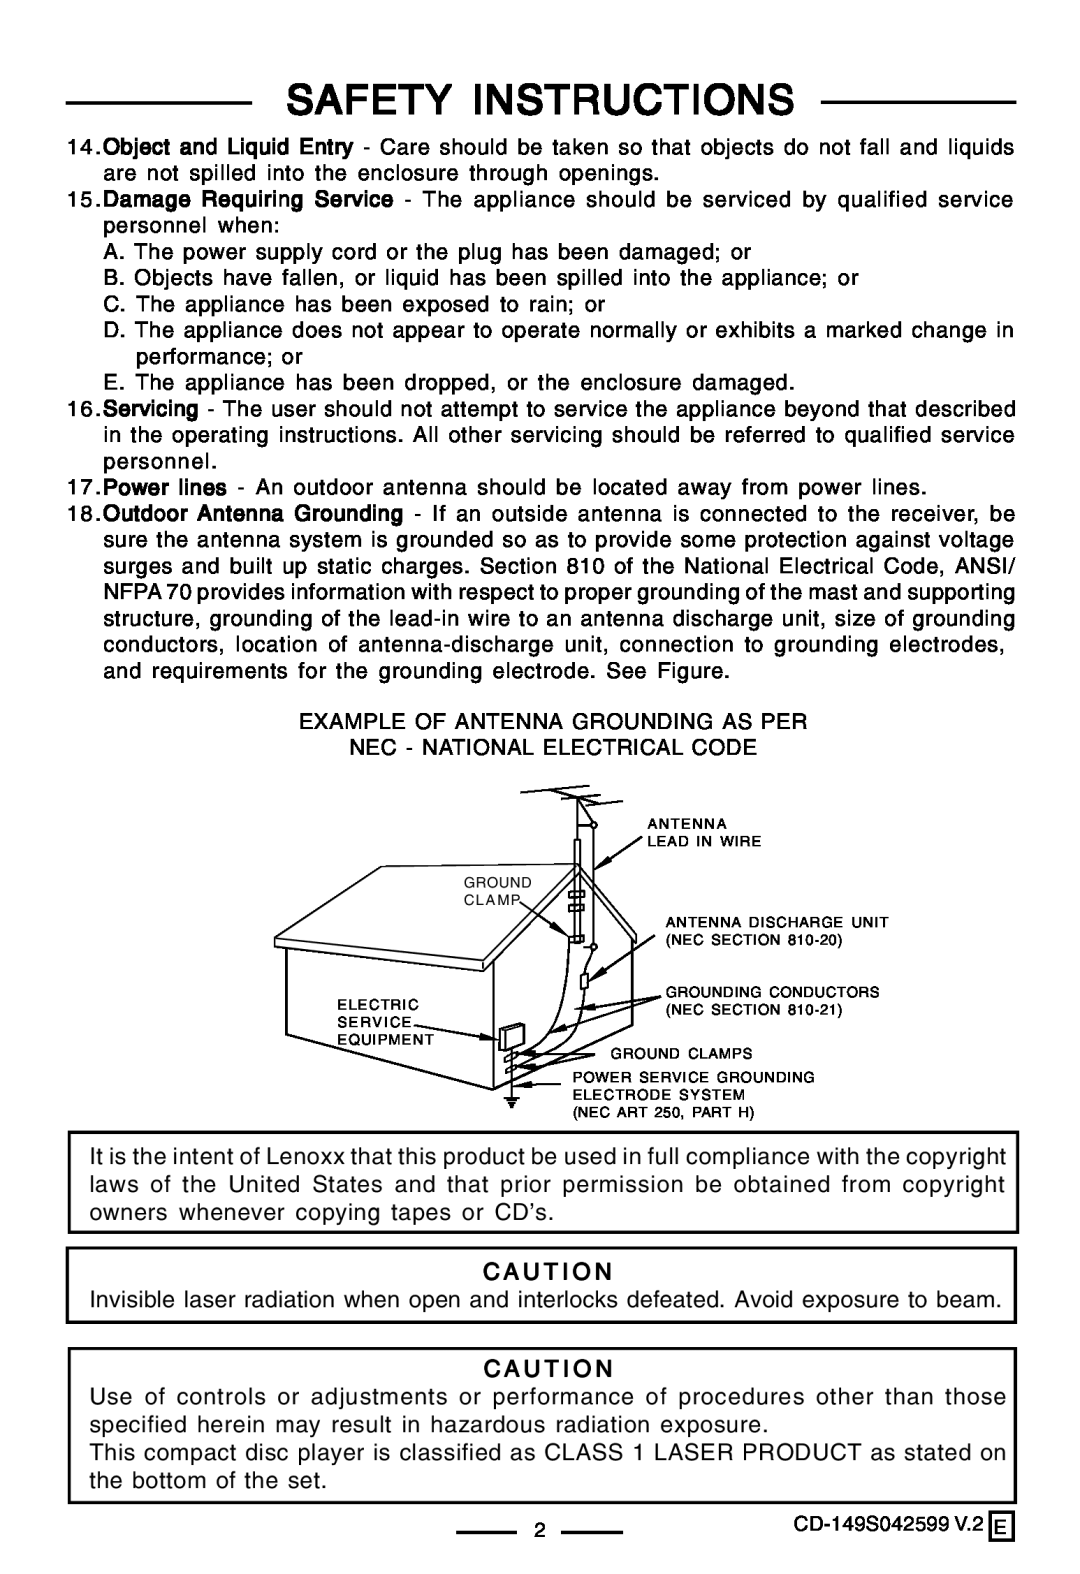 Lenoxx Electronics CD-149 operating instructions Safety Instructions, C A U T I O N 